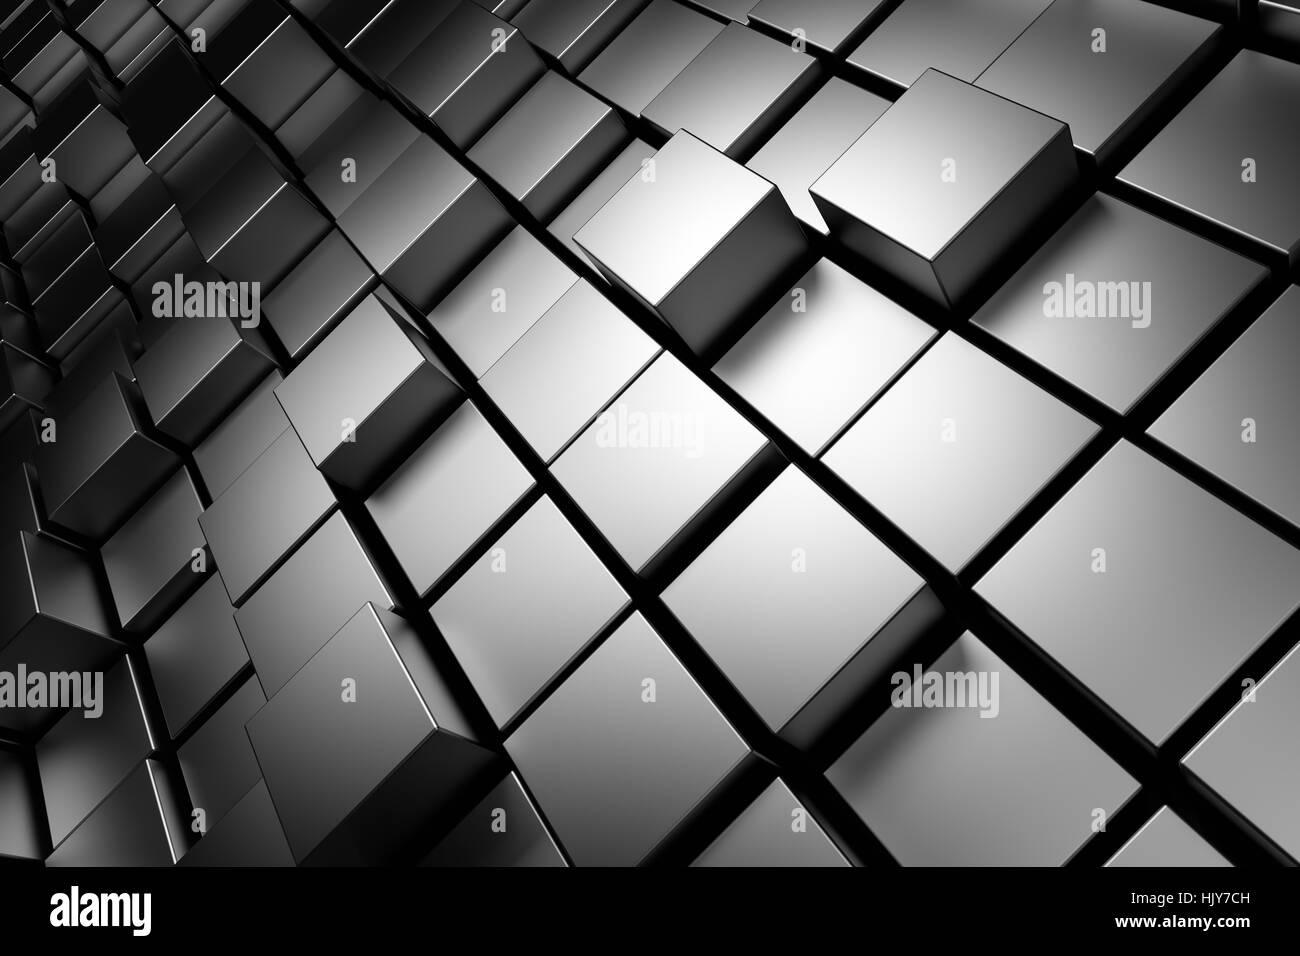 metal, square, brick, cube, render, backdrop, background, art, model, design, Stock Photo